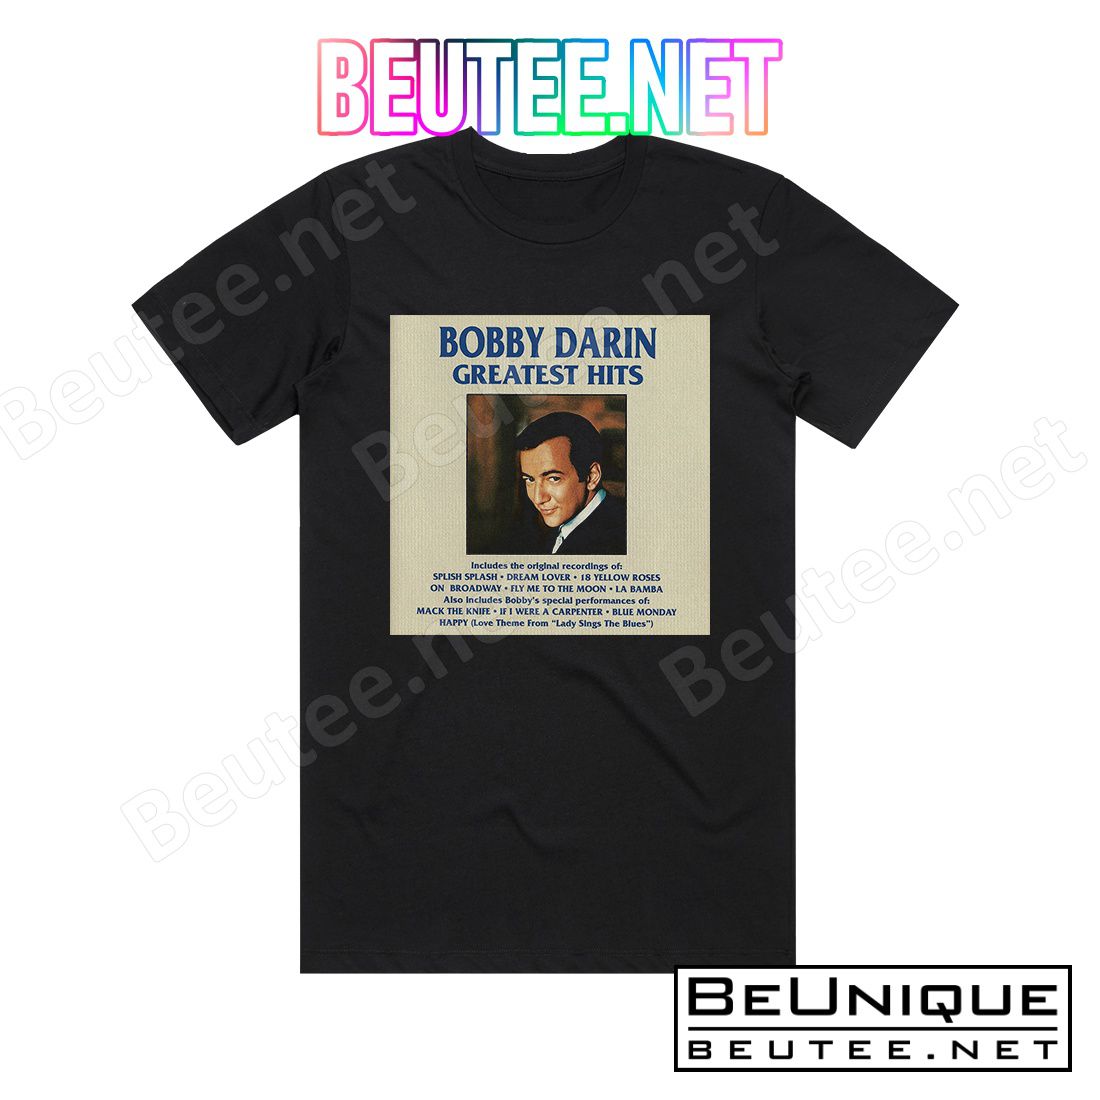 Bobby Darin Greatest Hits Album Cover T-Shirt